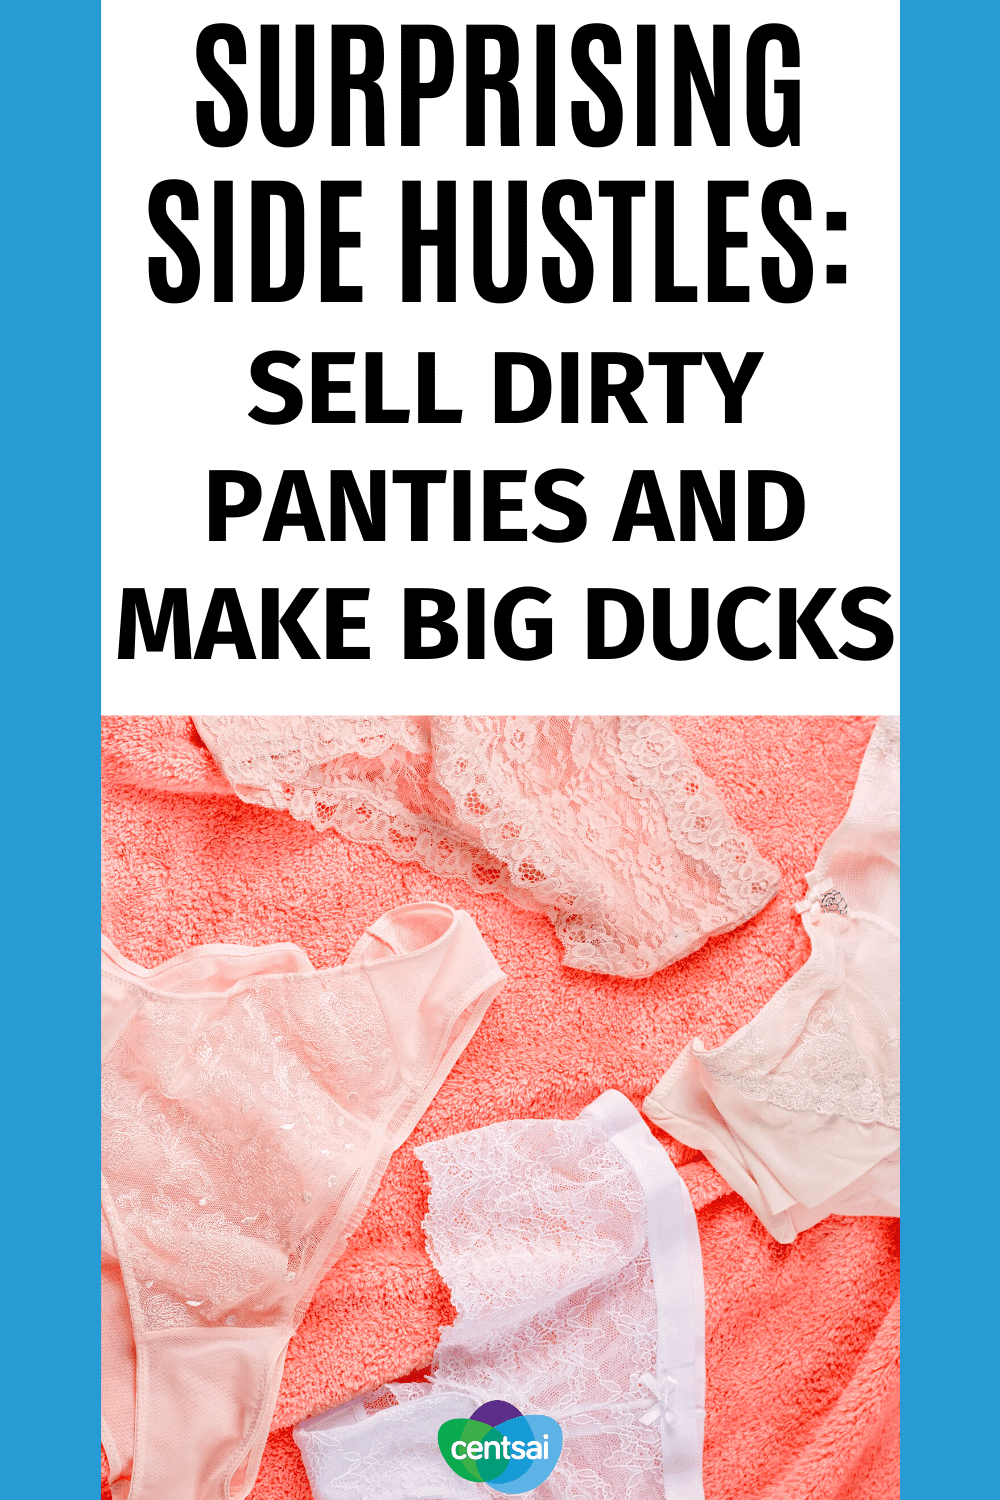 Surprising Side Hustles Sell Dirty Panties and Make Big Bucks!